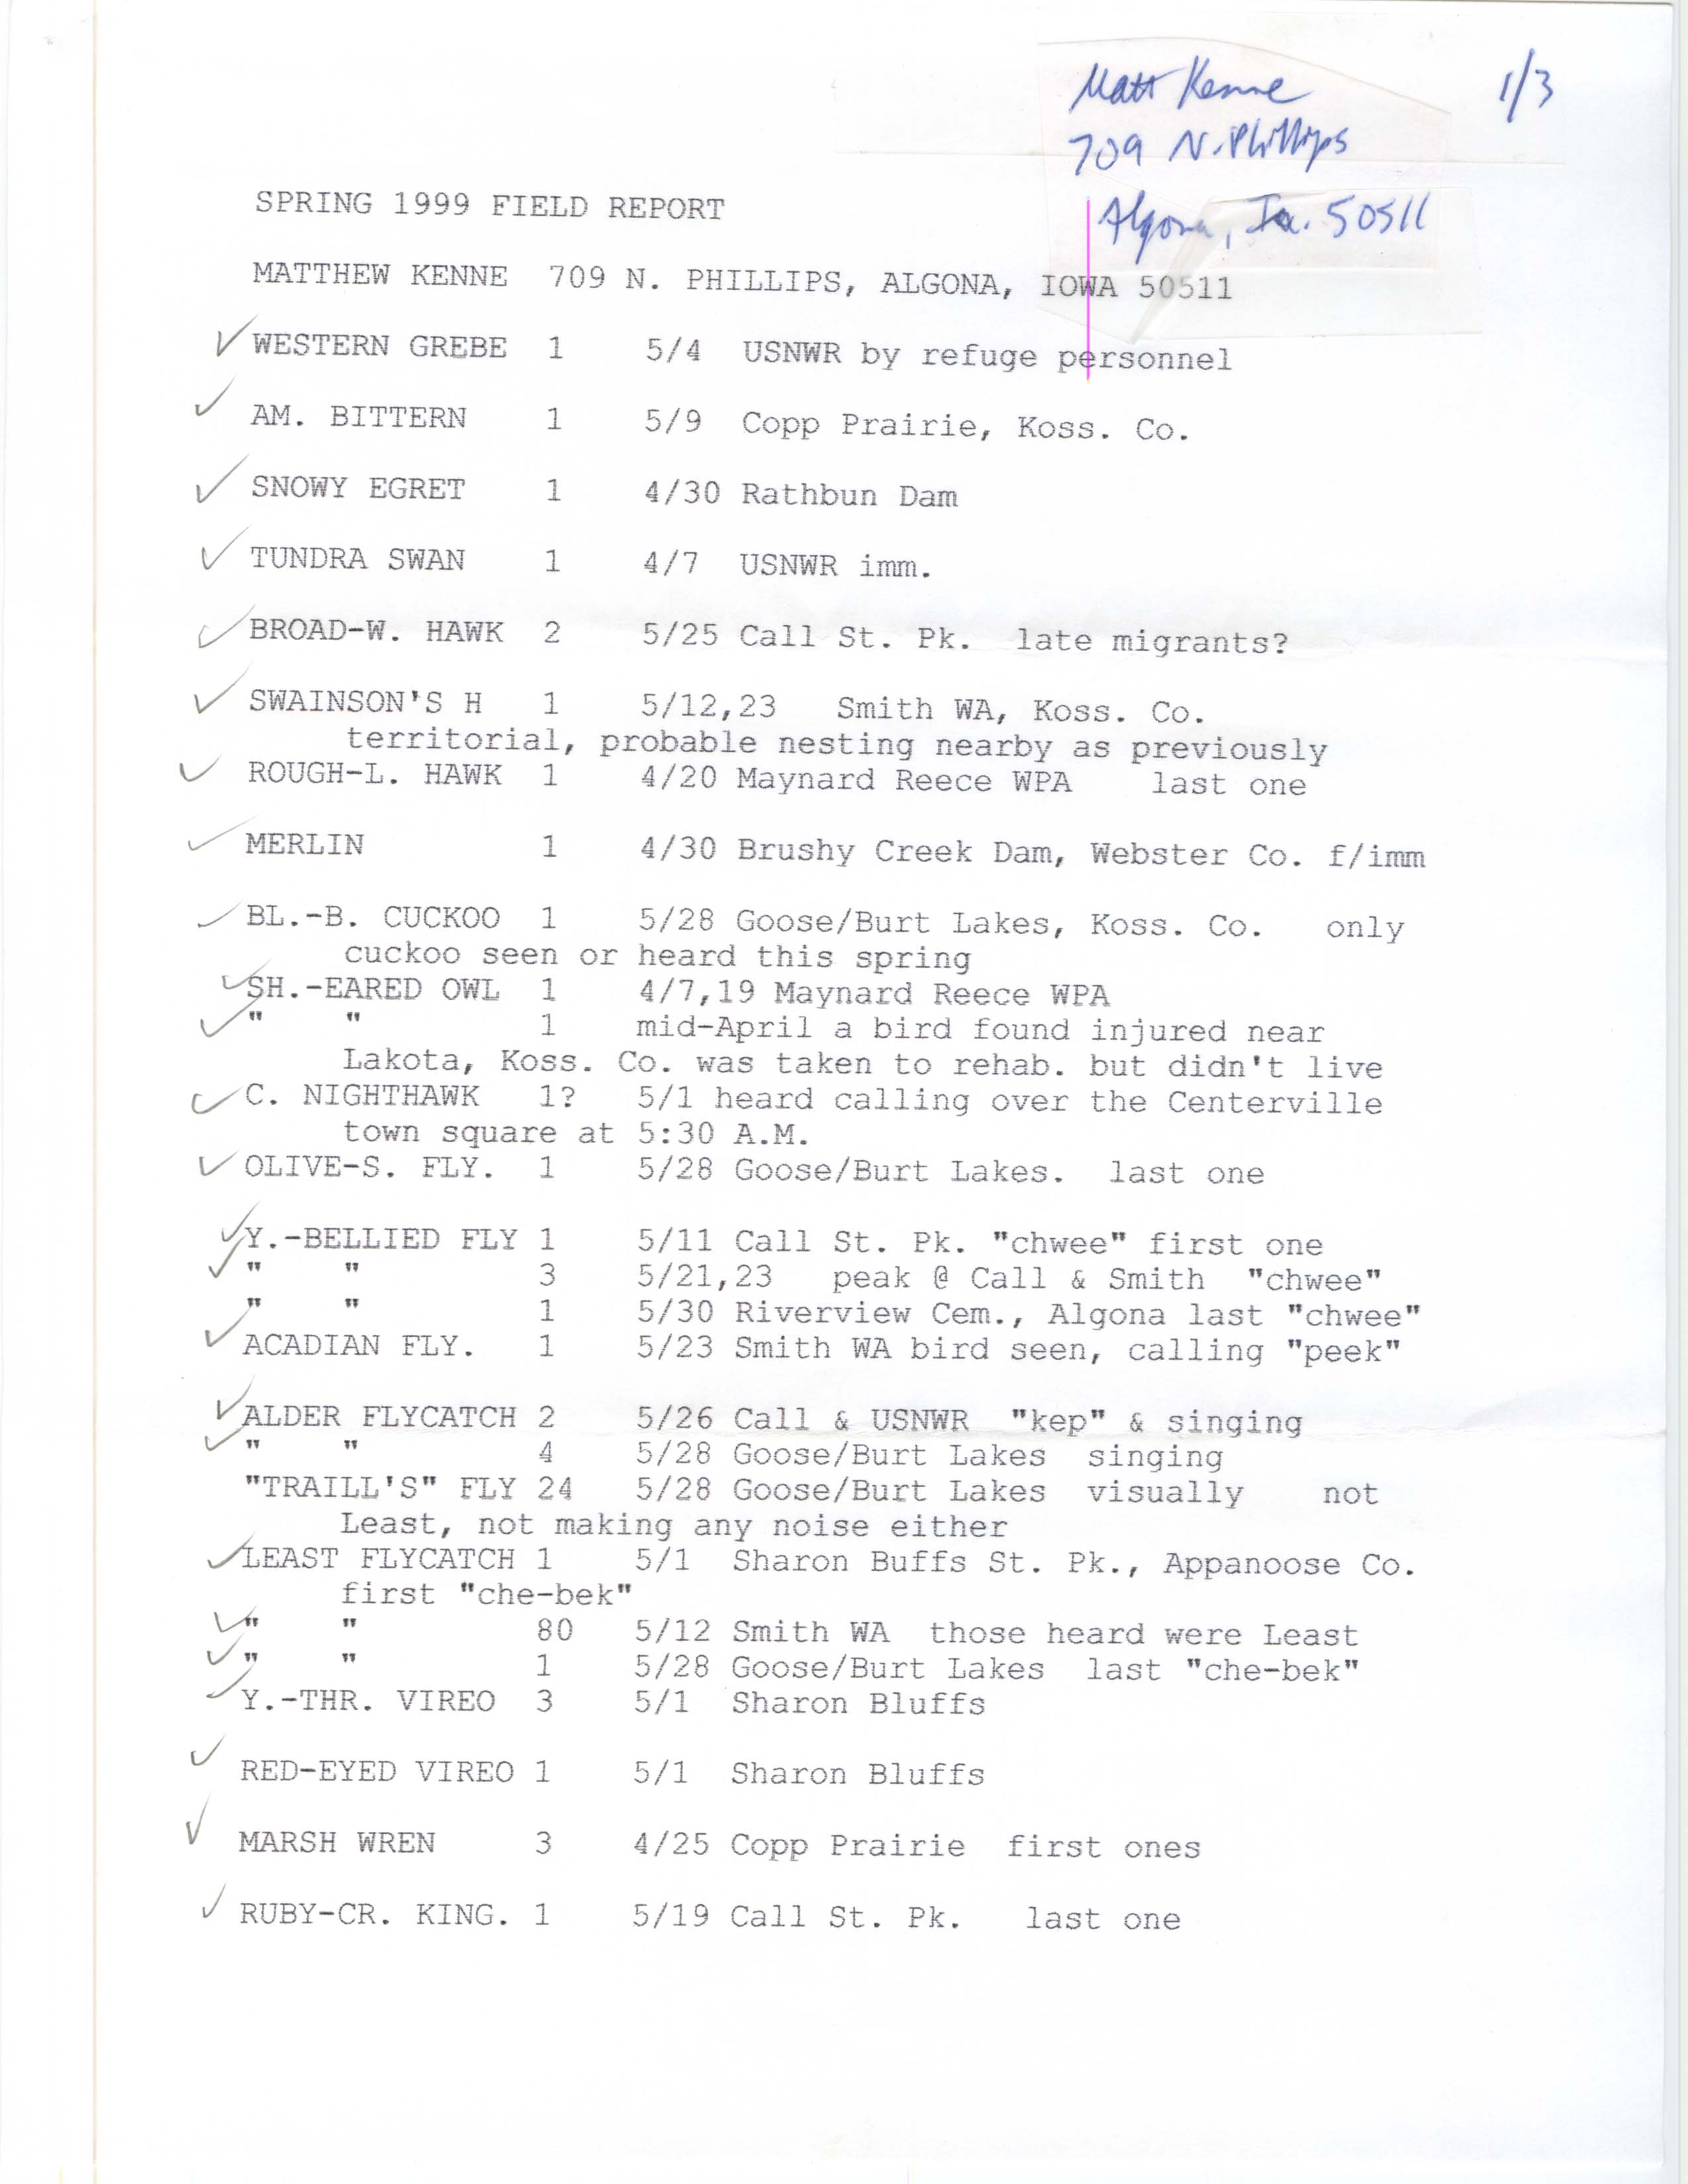 Spring 1999 field report, Matt Kenne